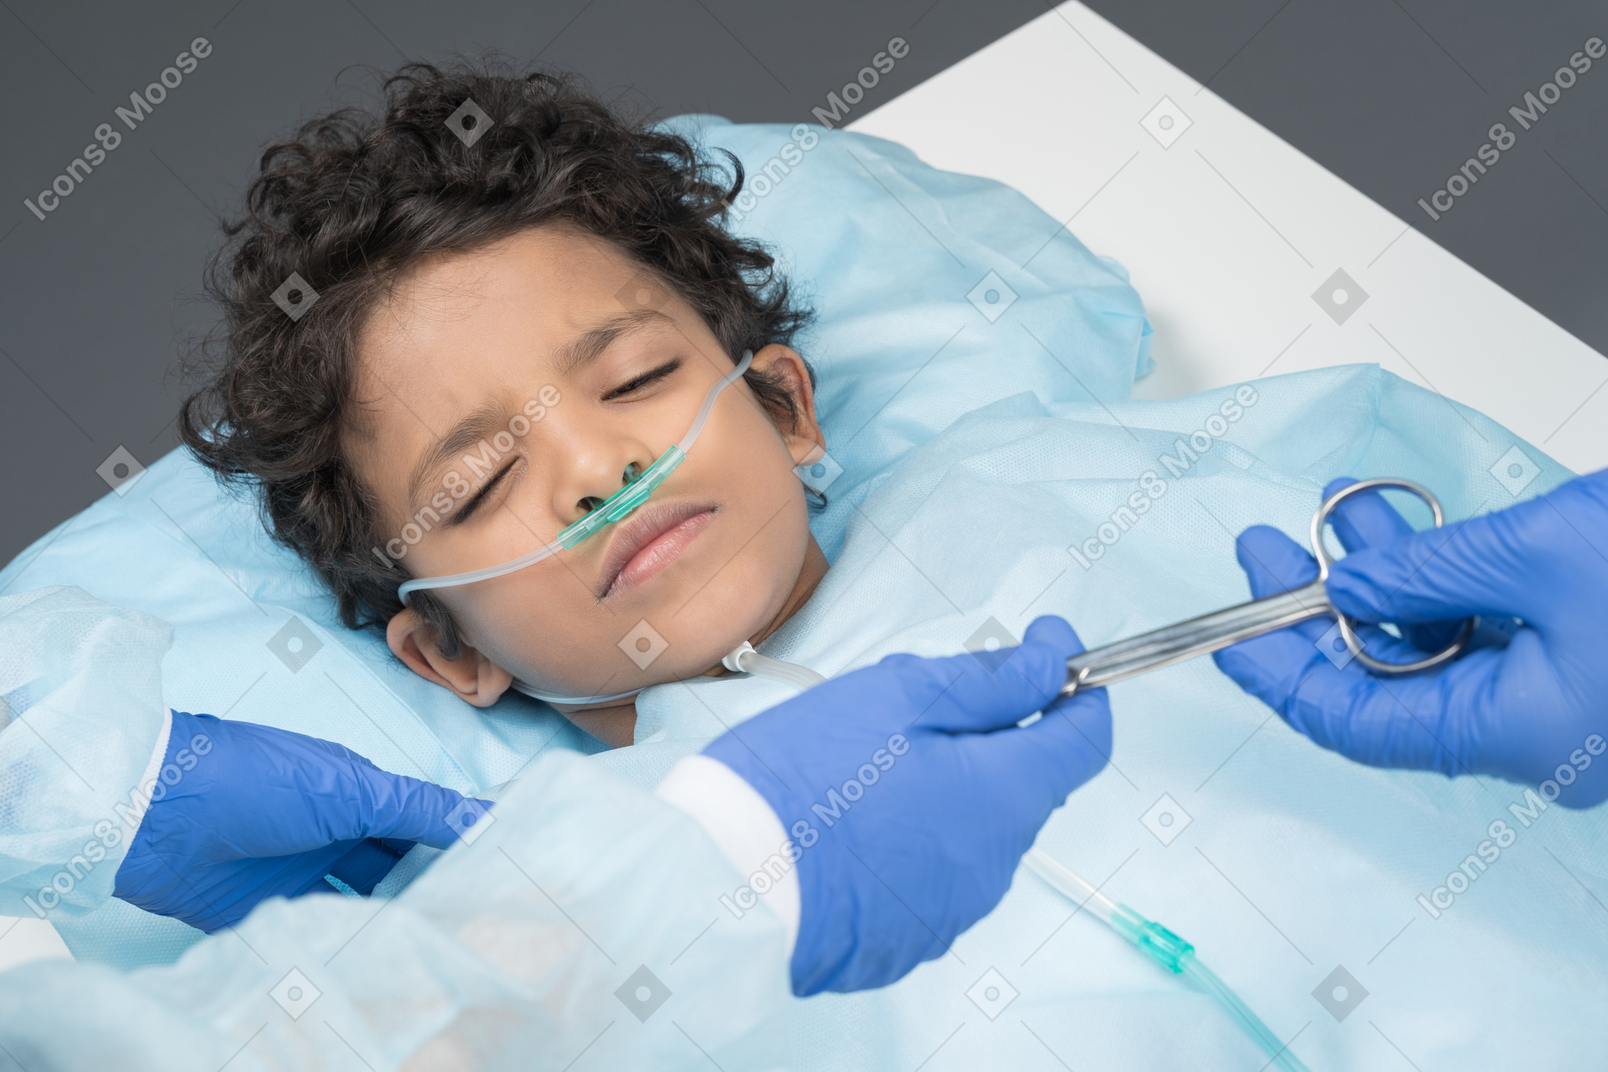 Chirurgie du petit garçon